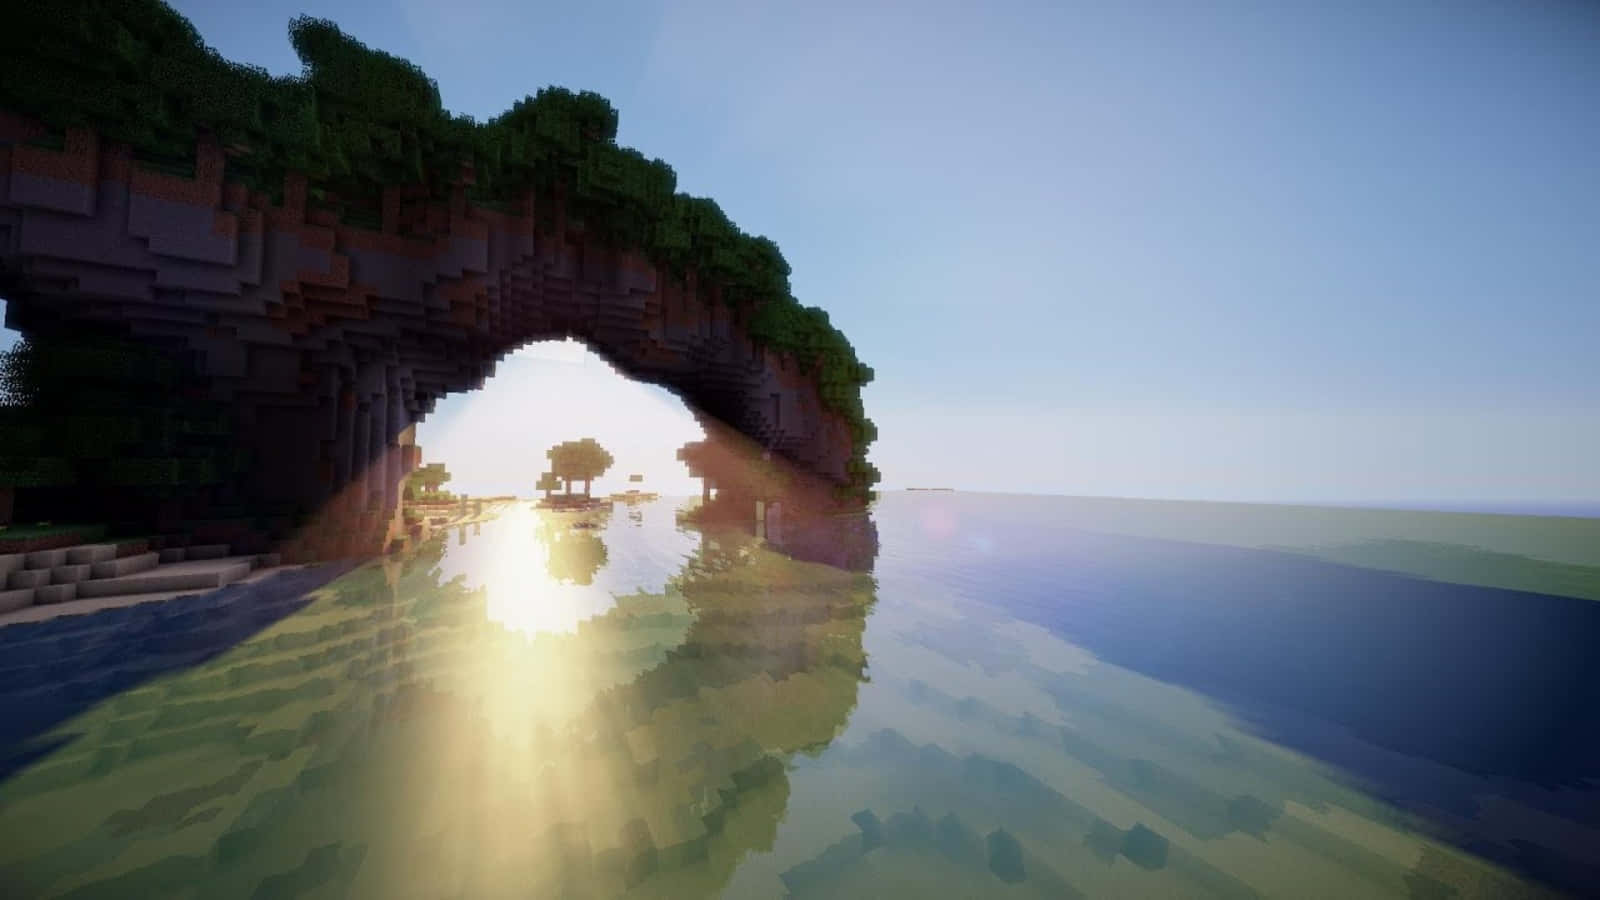 Minecraftfelsformation Am Ozean Bild